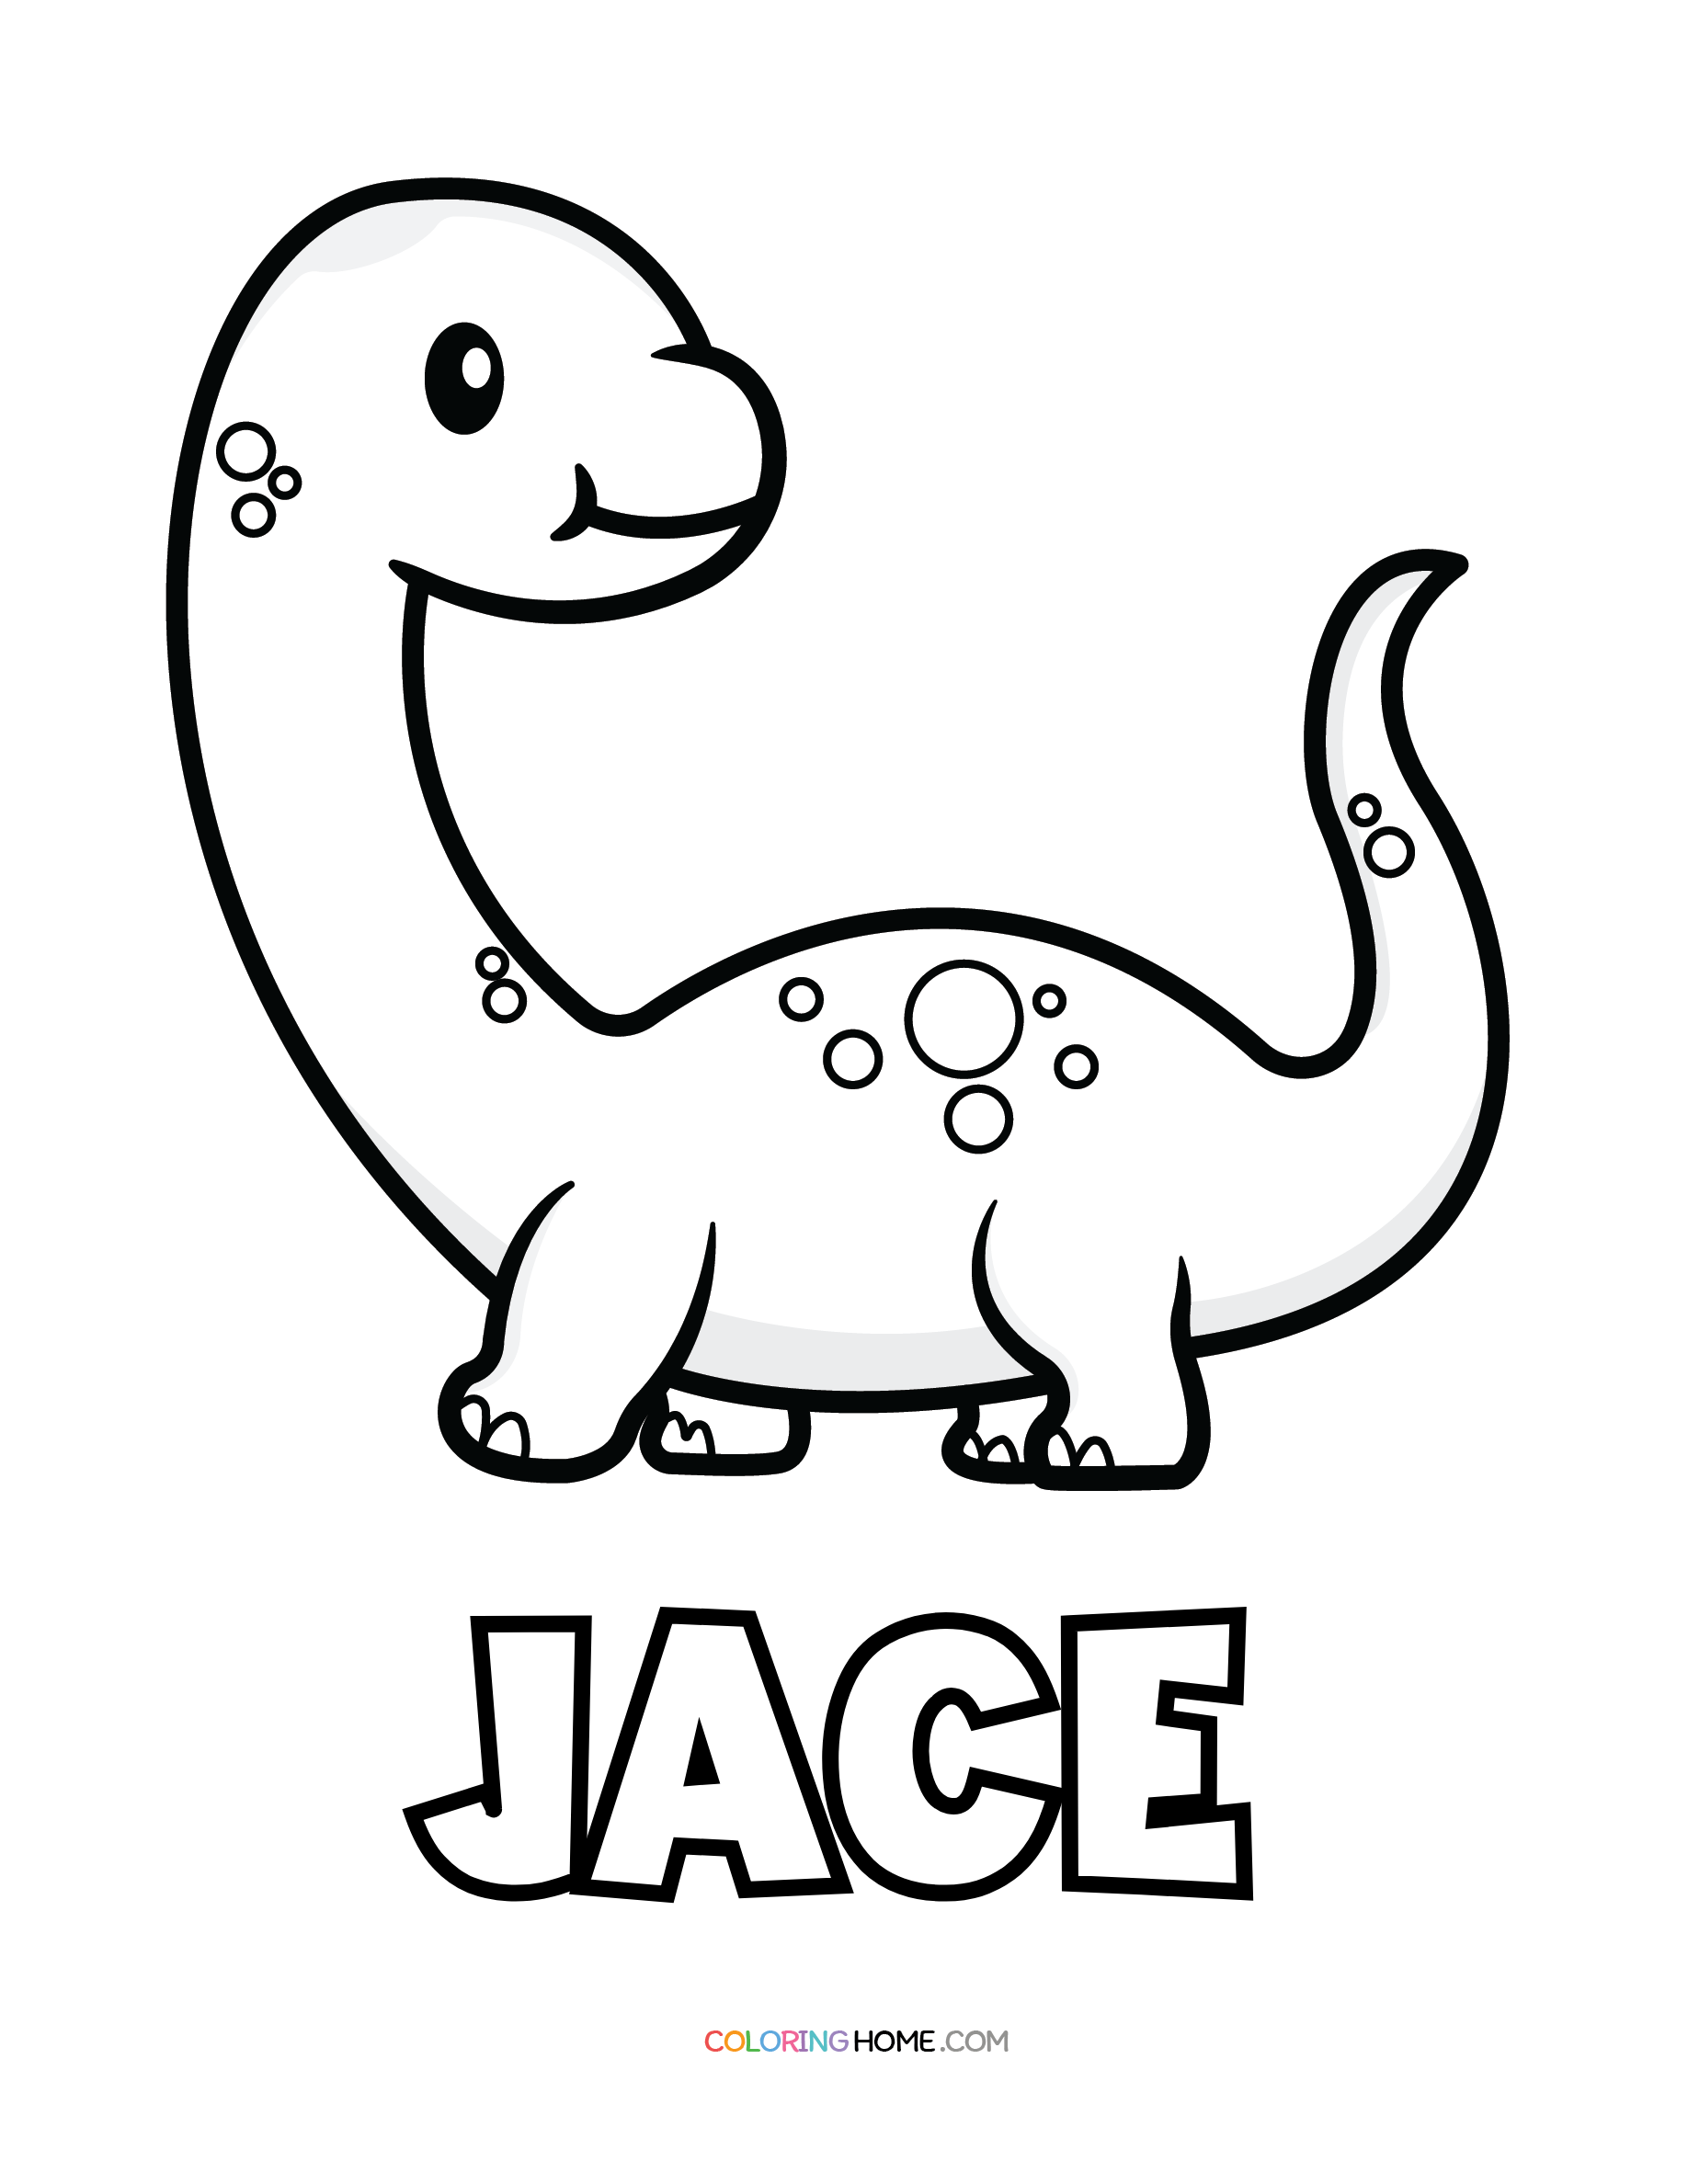 Jace dinosaur coloring page